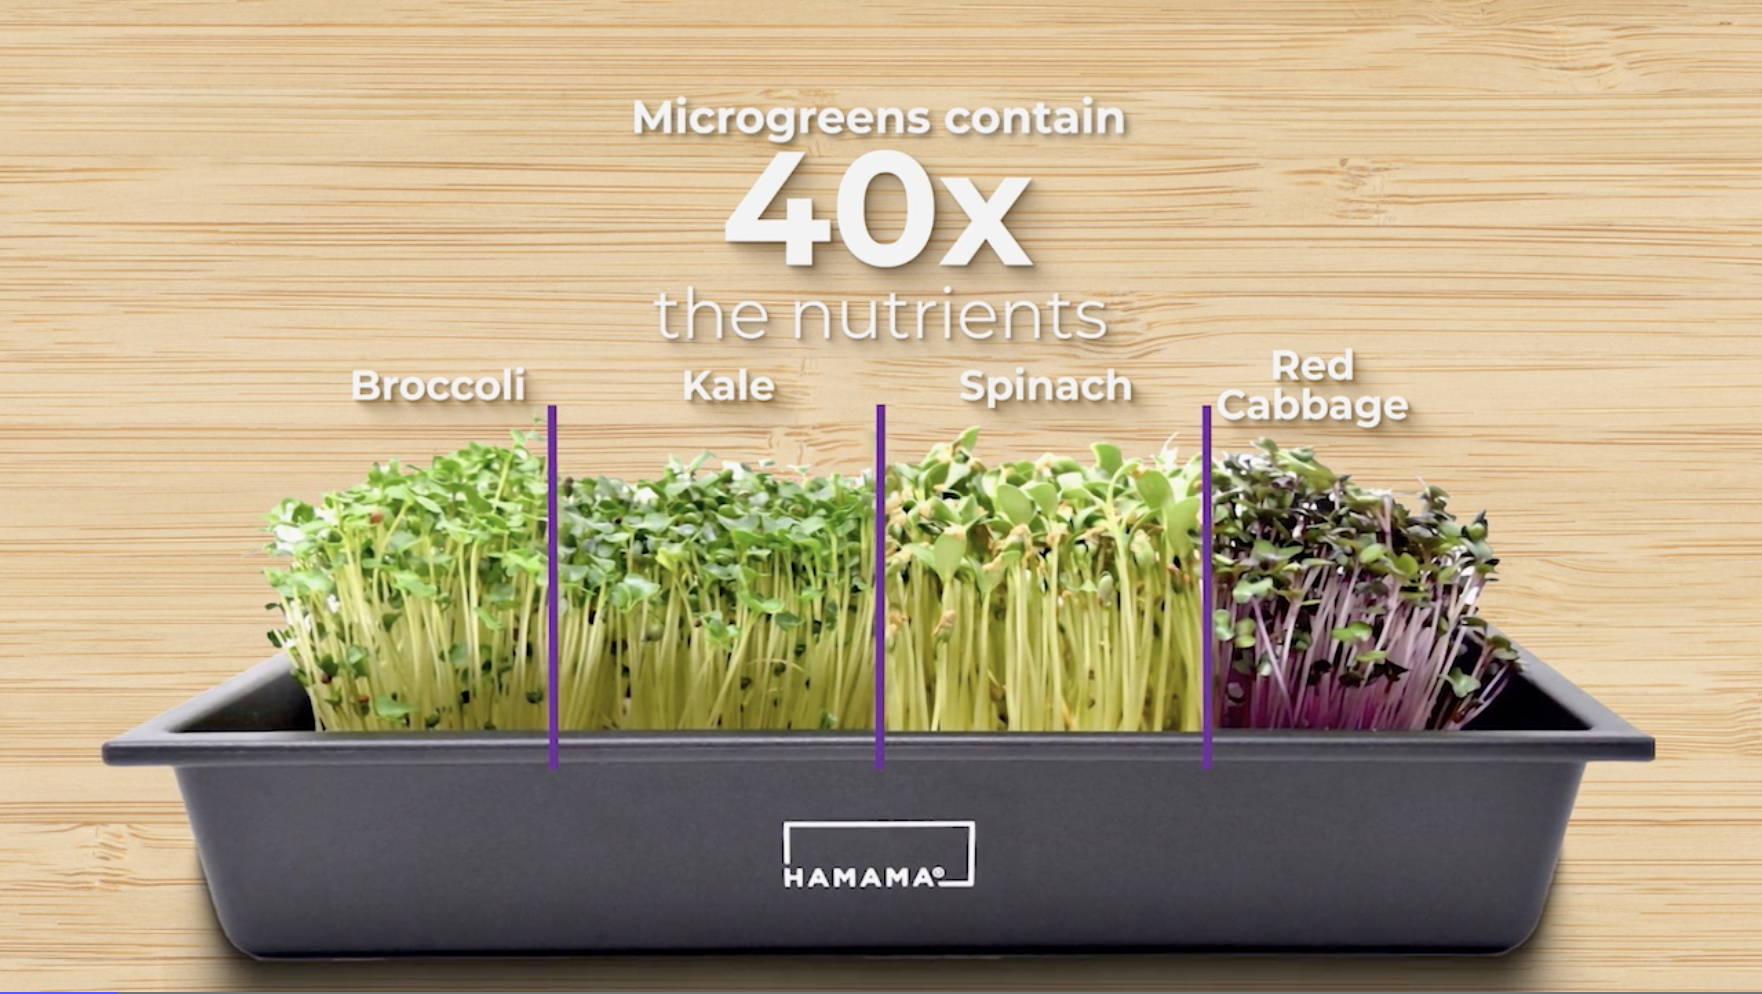 Superfoods Microgreens Seeds Powerhouse Veggies Refill for Hamama Home Microgreens Growing Kit Grow Fresh Micro Greens Indoors Every Week Just Add Water Grow Superfood Veggies and Supergeens. 